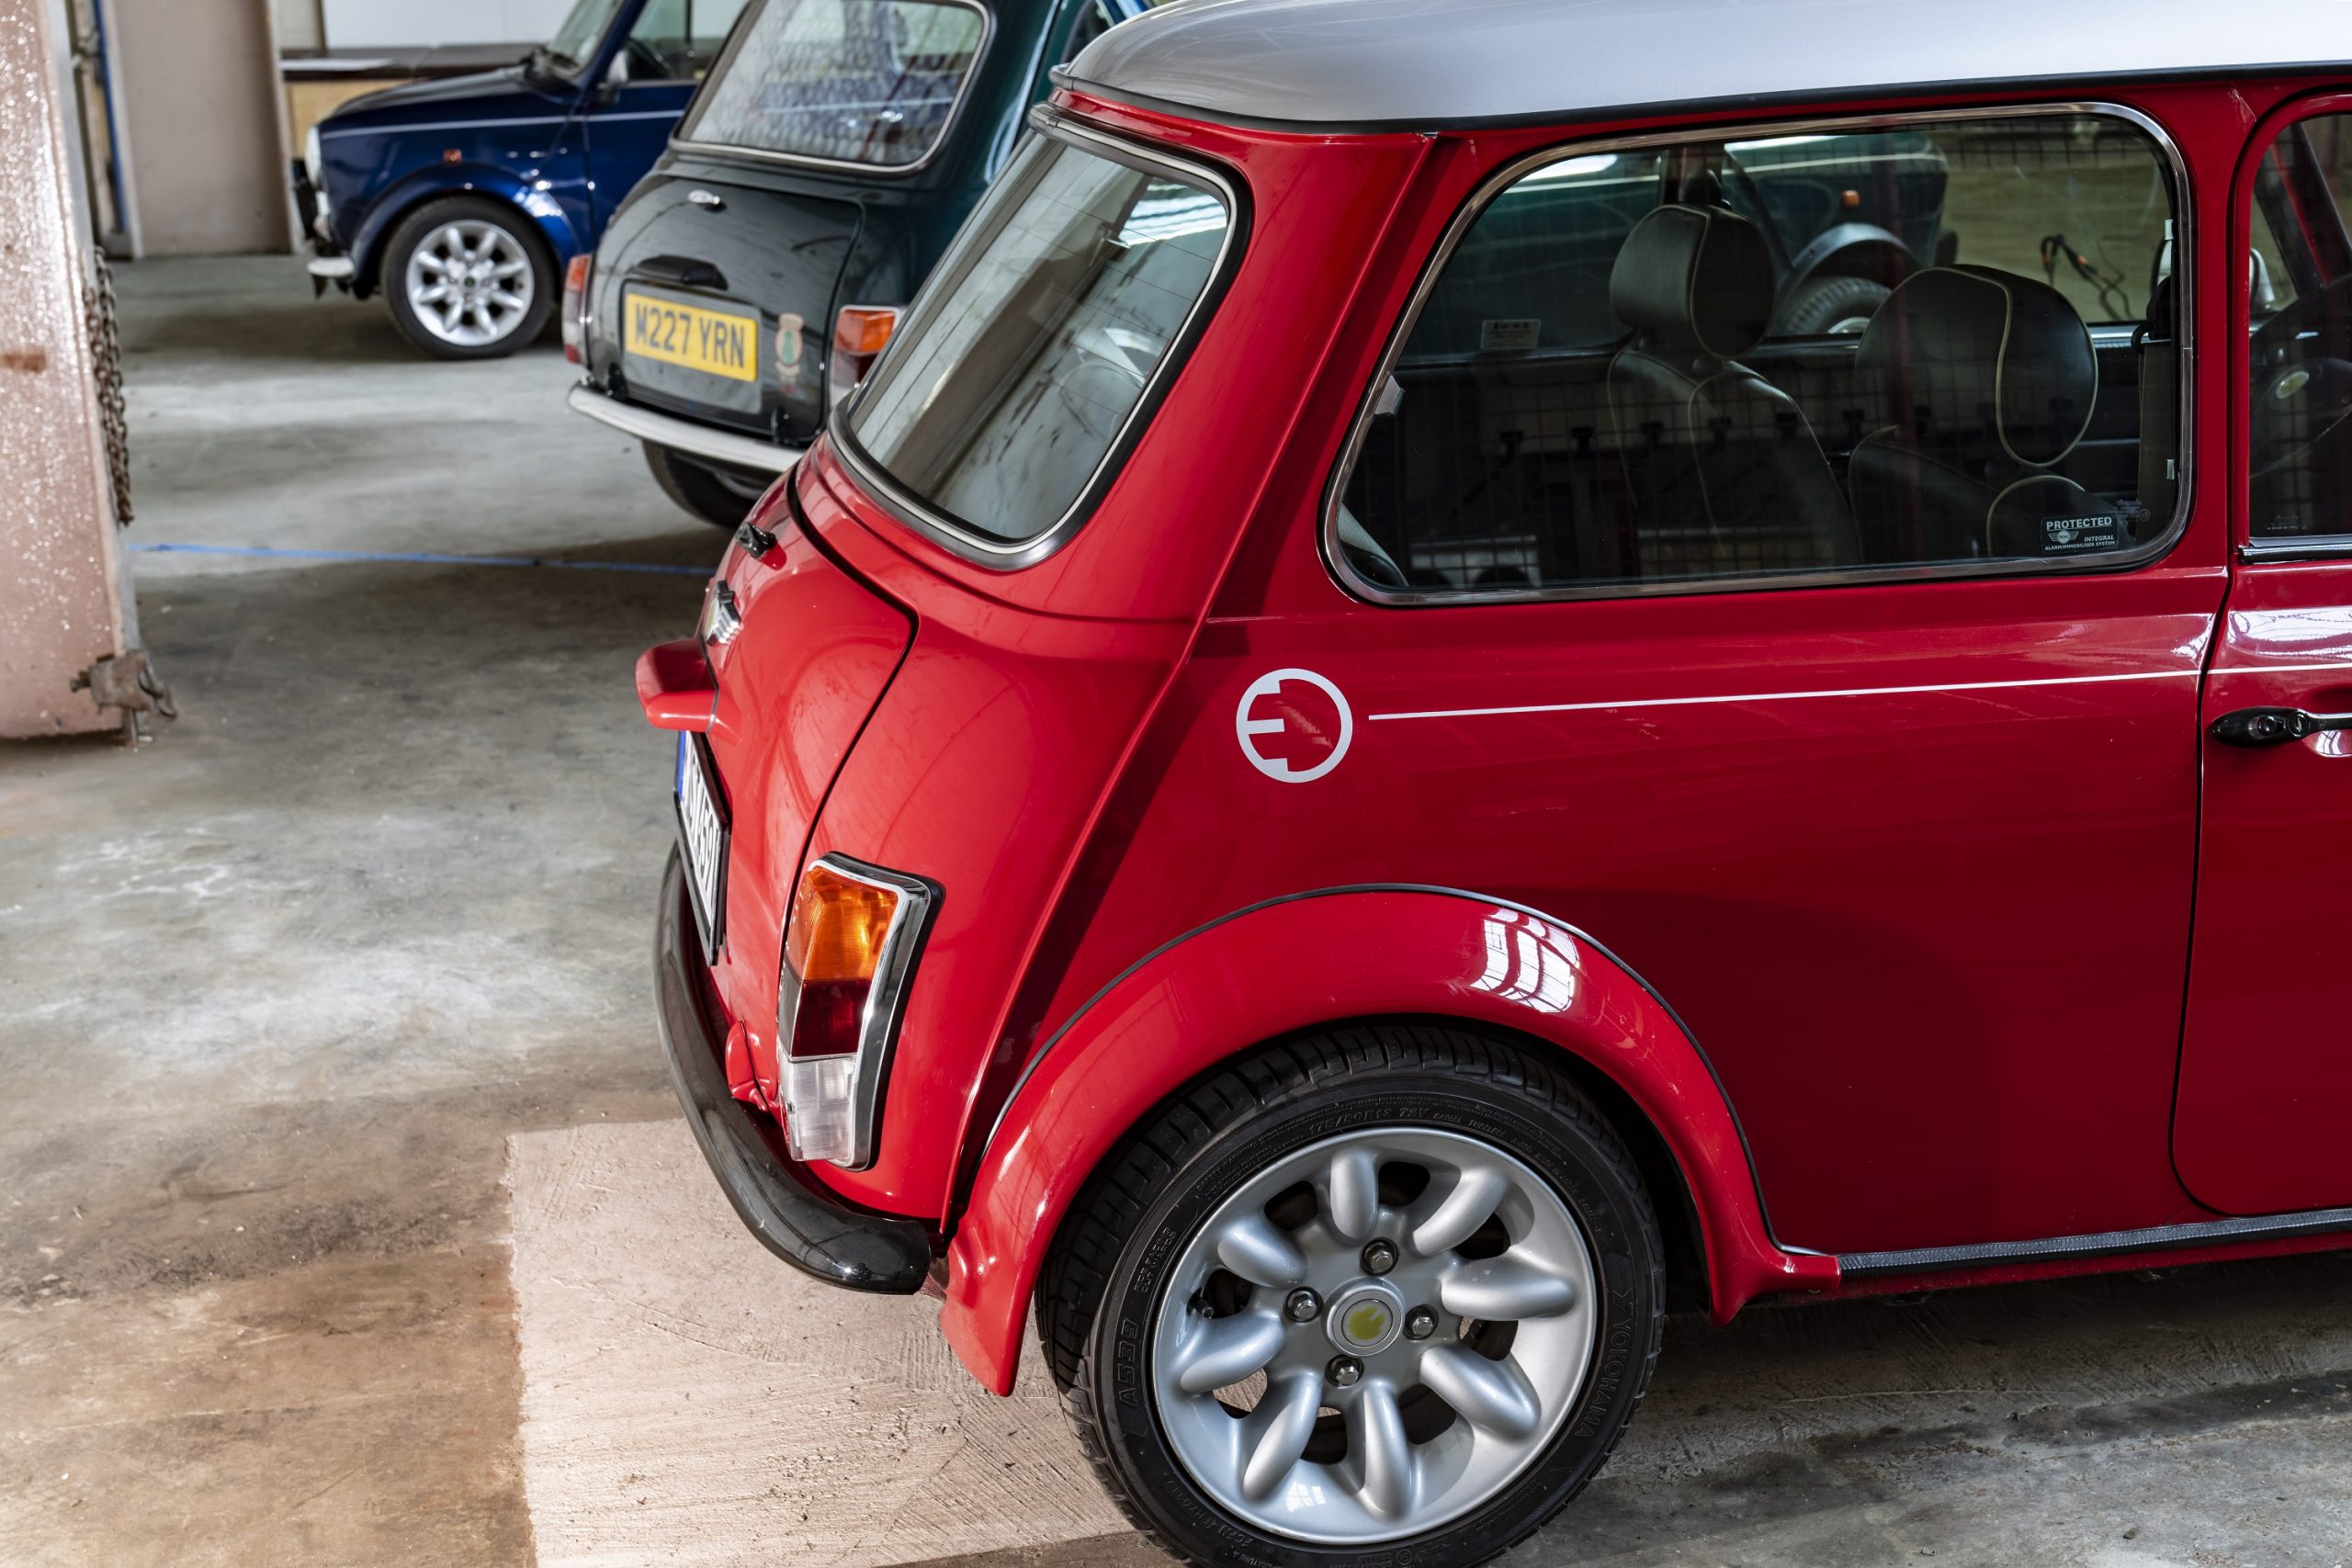 The rear of a red Mini Cooper EV seen in Mini's plant in the UK